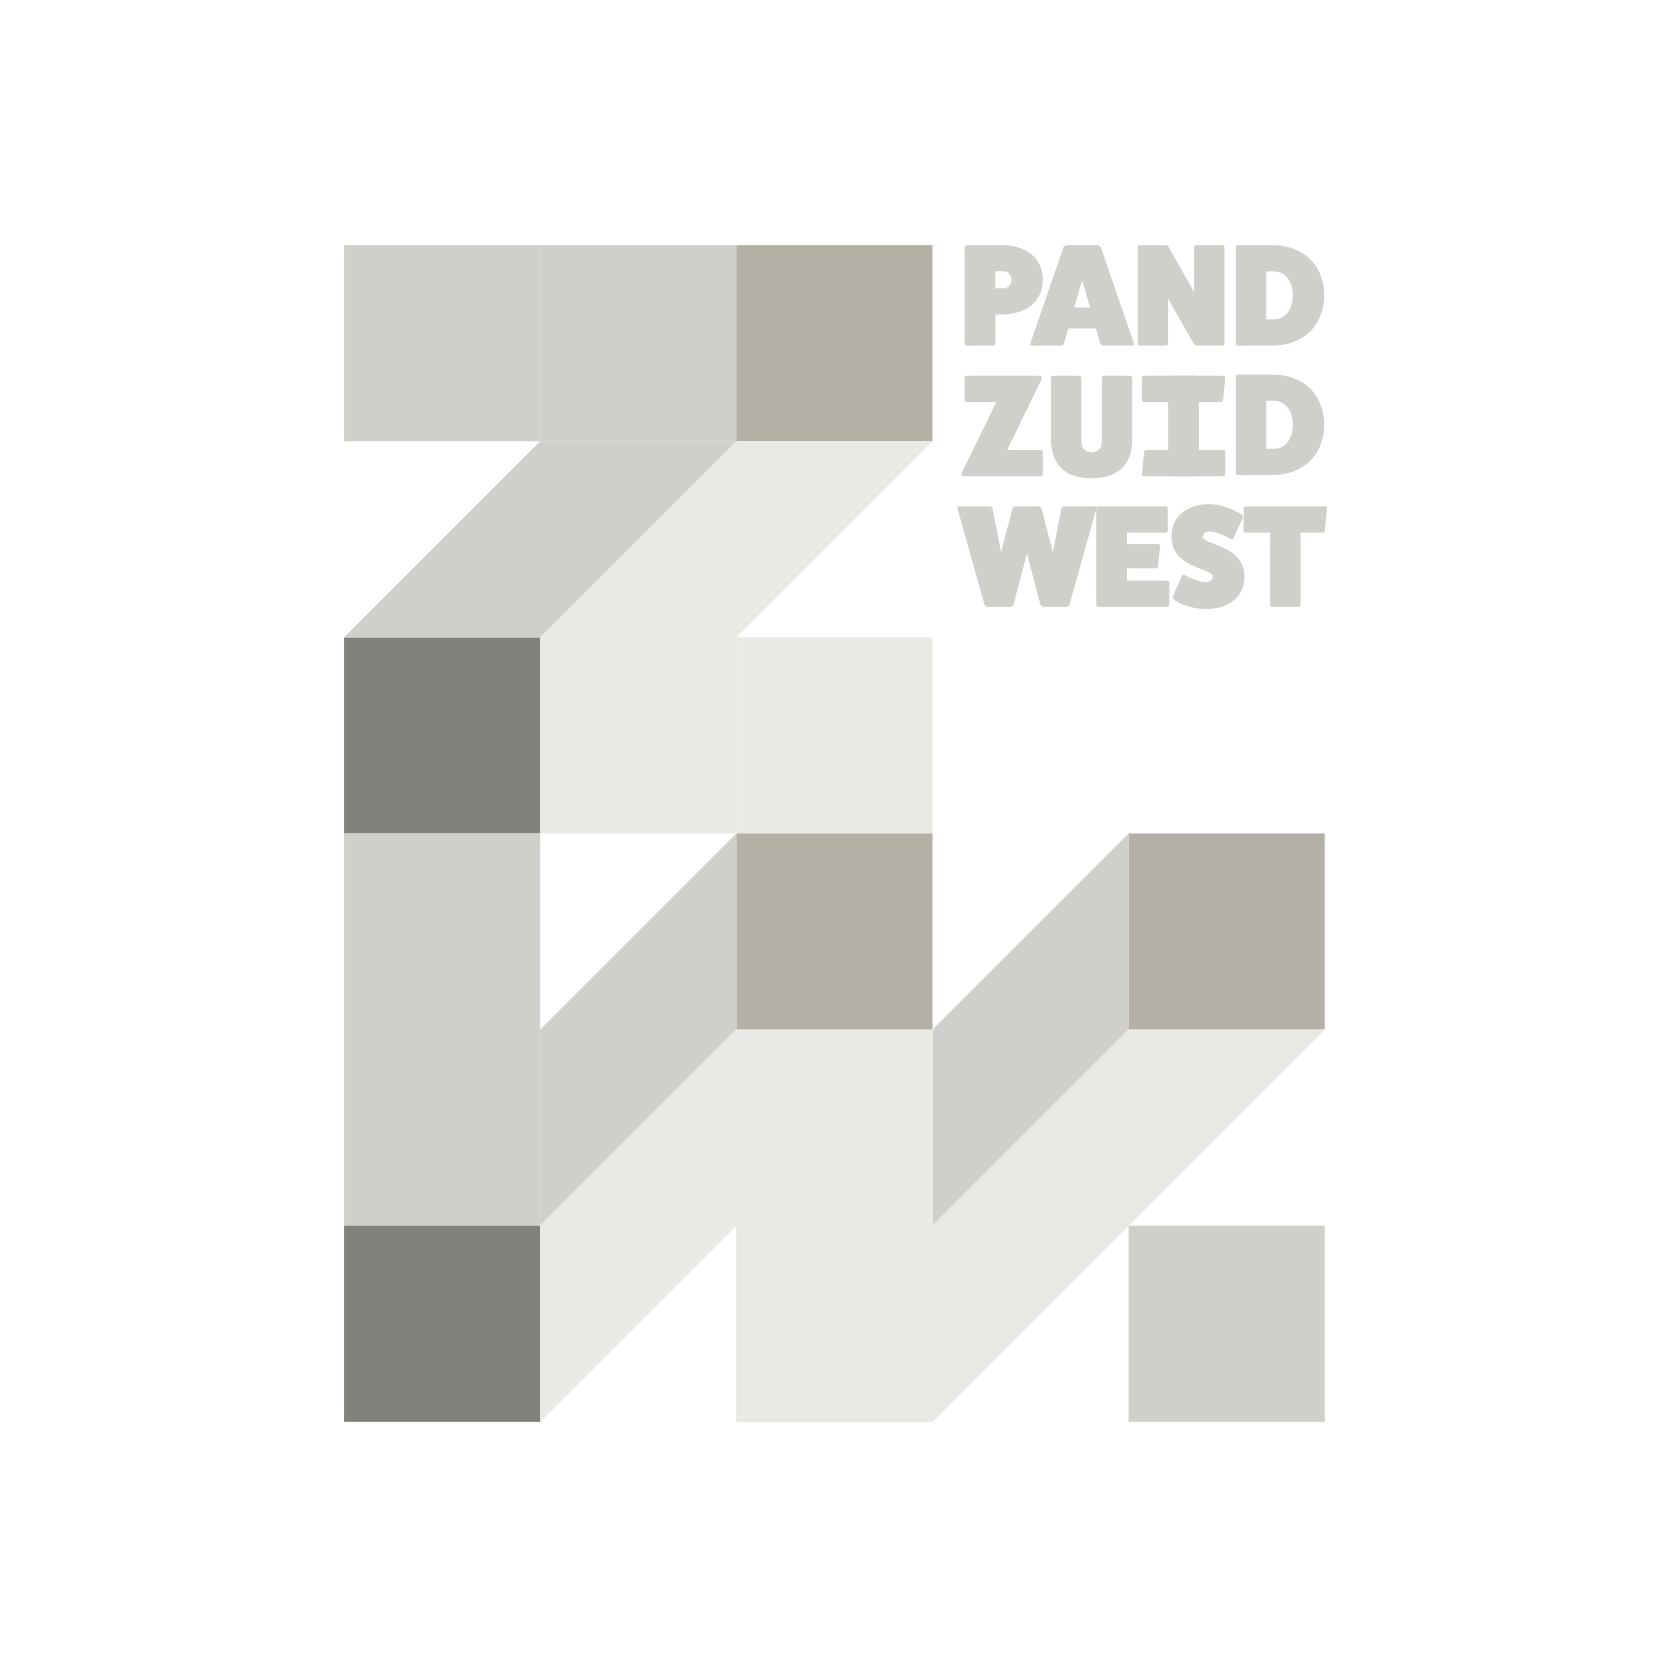 pand zuid west logo set-73.png